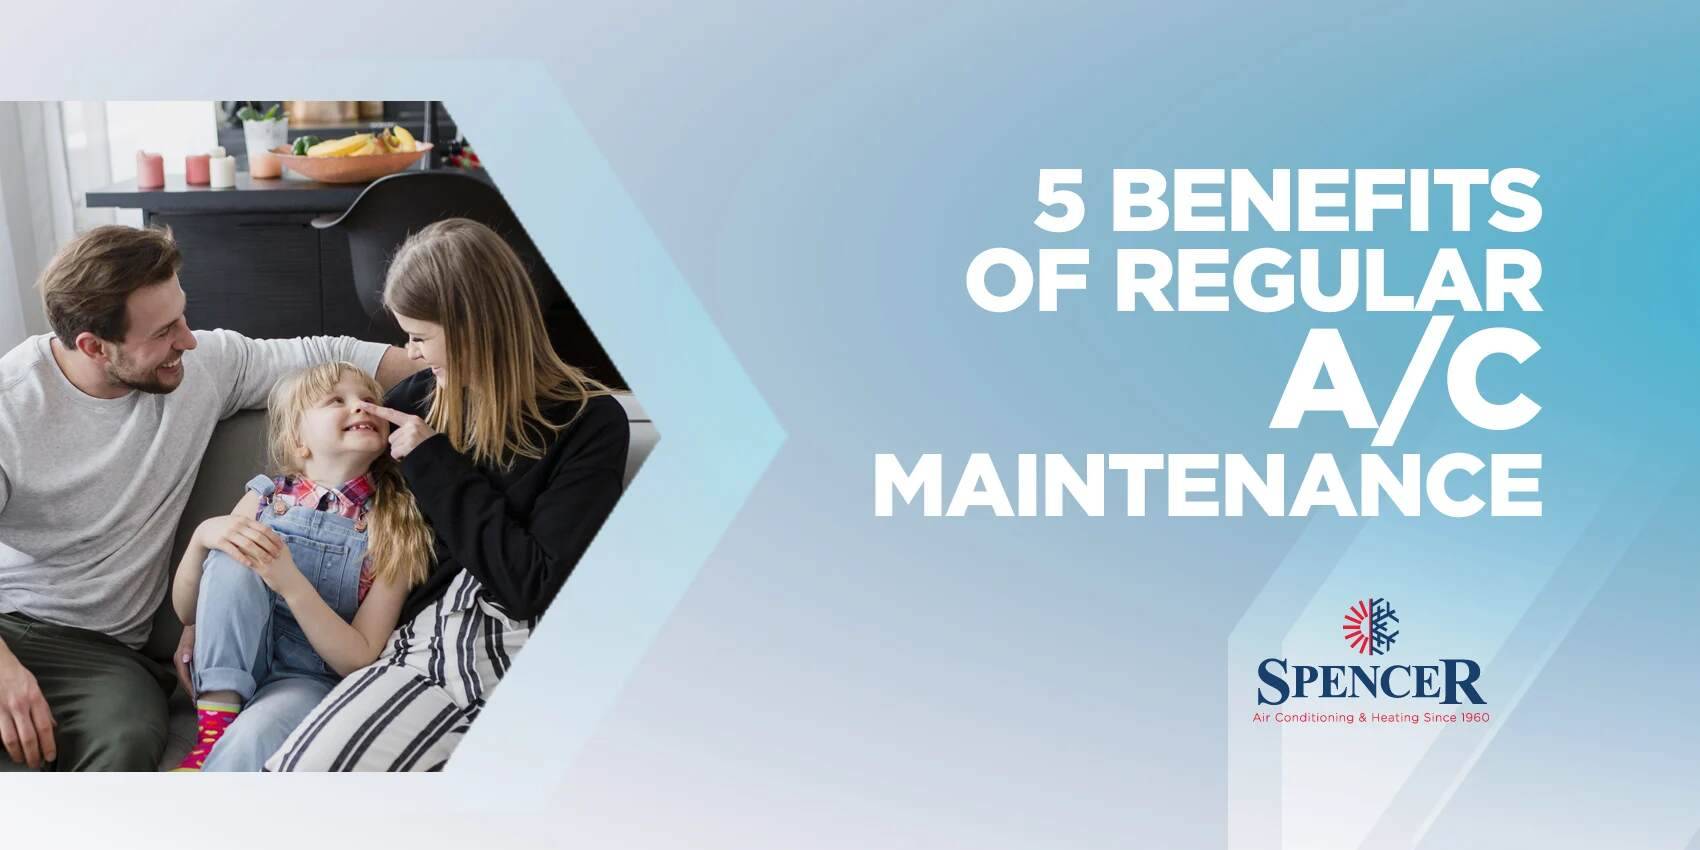 spencer 5 Benefits of Regular A/C Maintenance